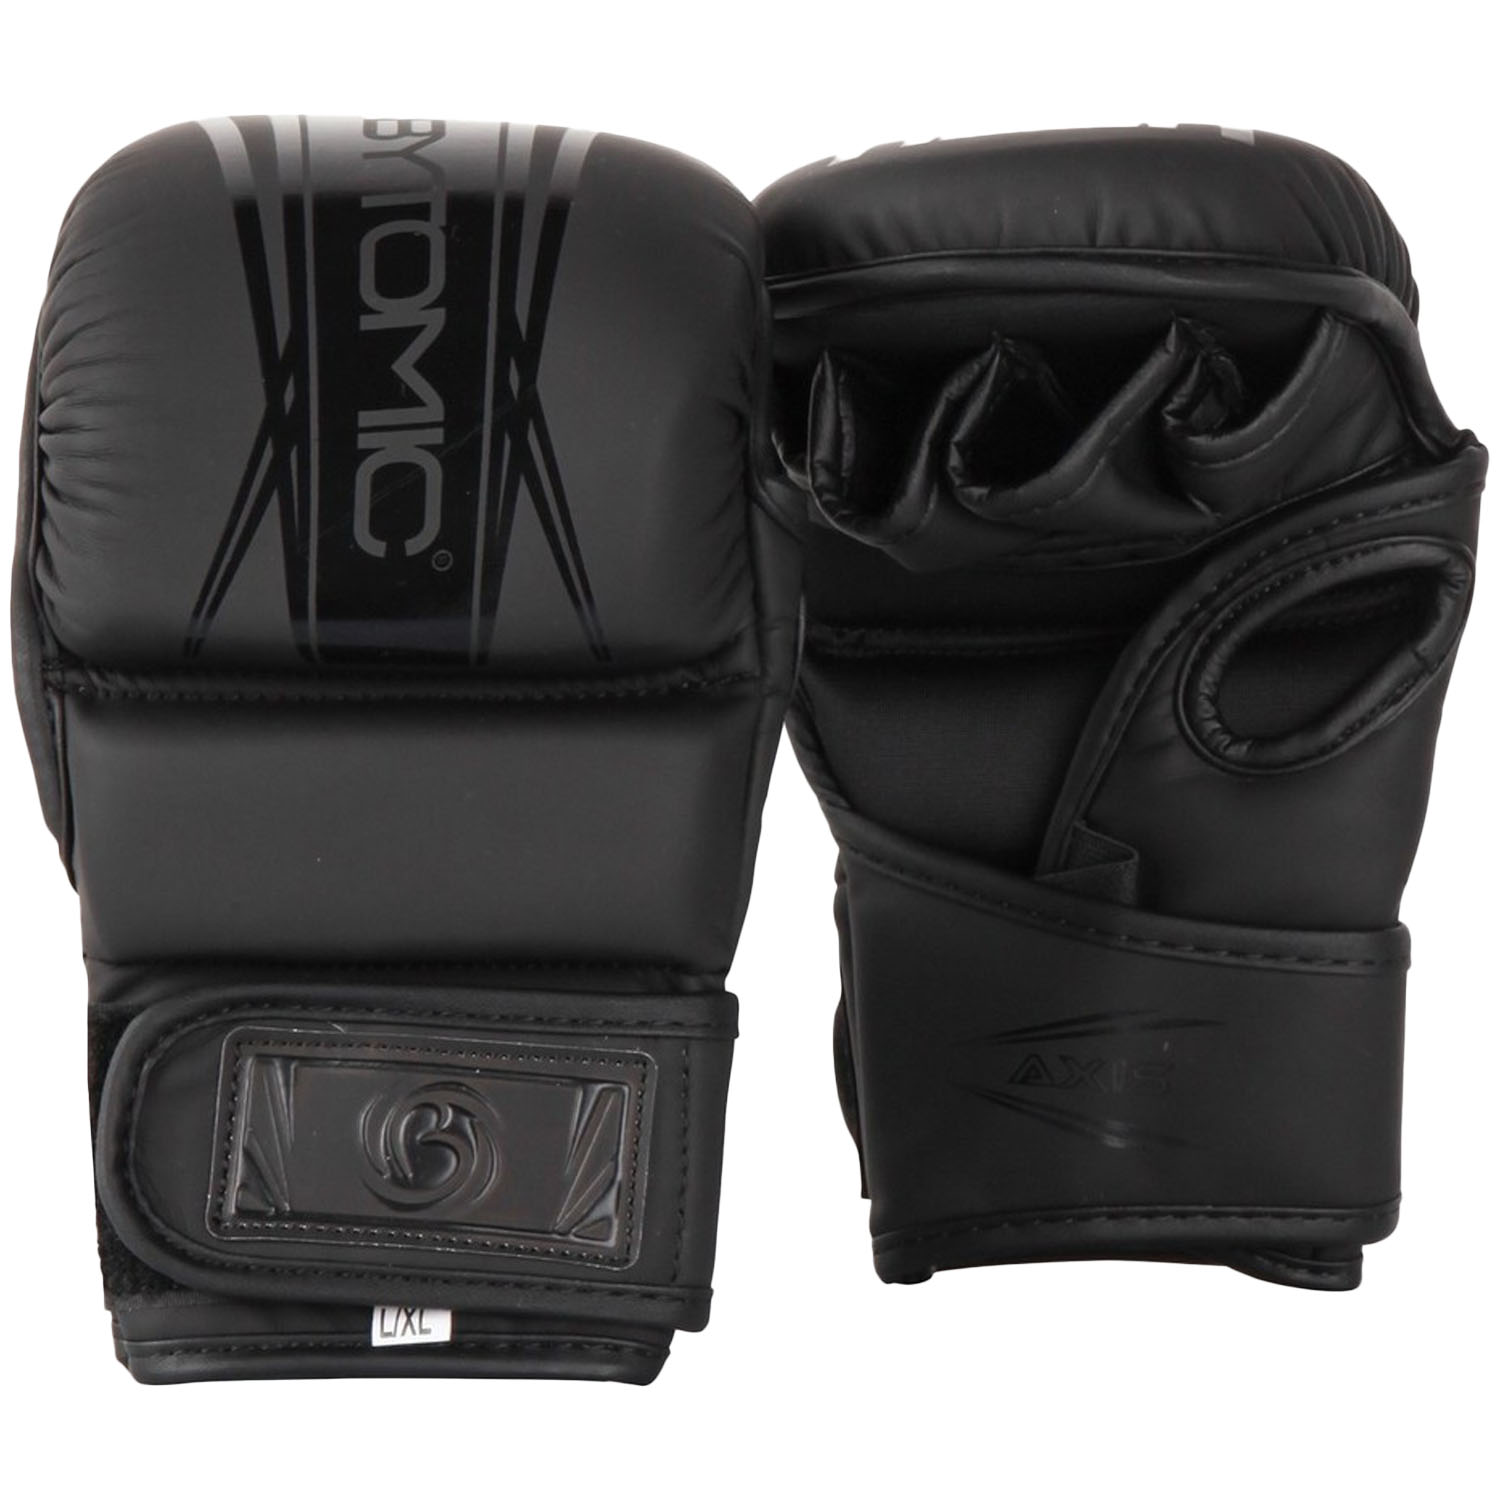 Bytomic MMA Sparring Boxhandschuhe, Axis V2, schwarz-schwarz, L/XL